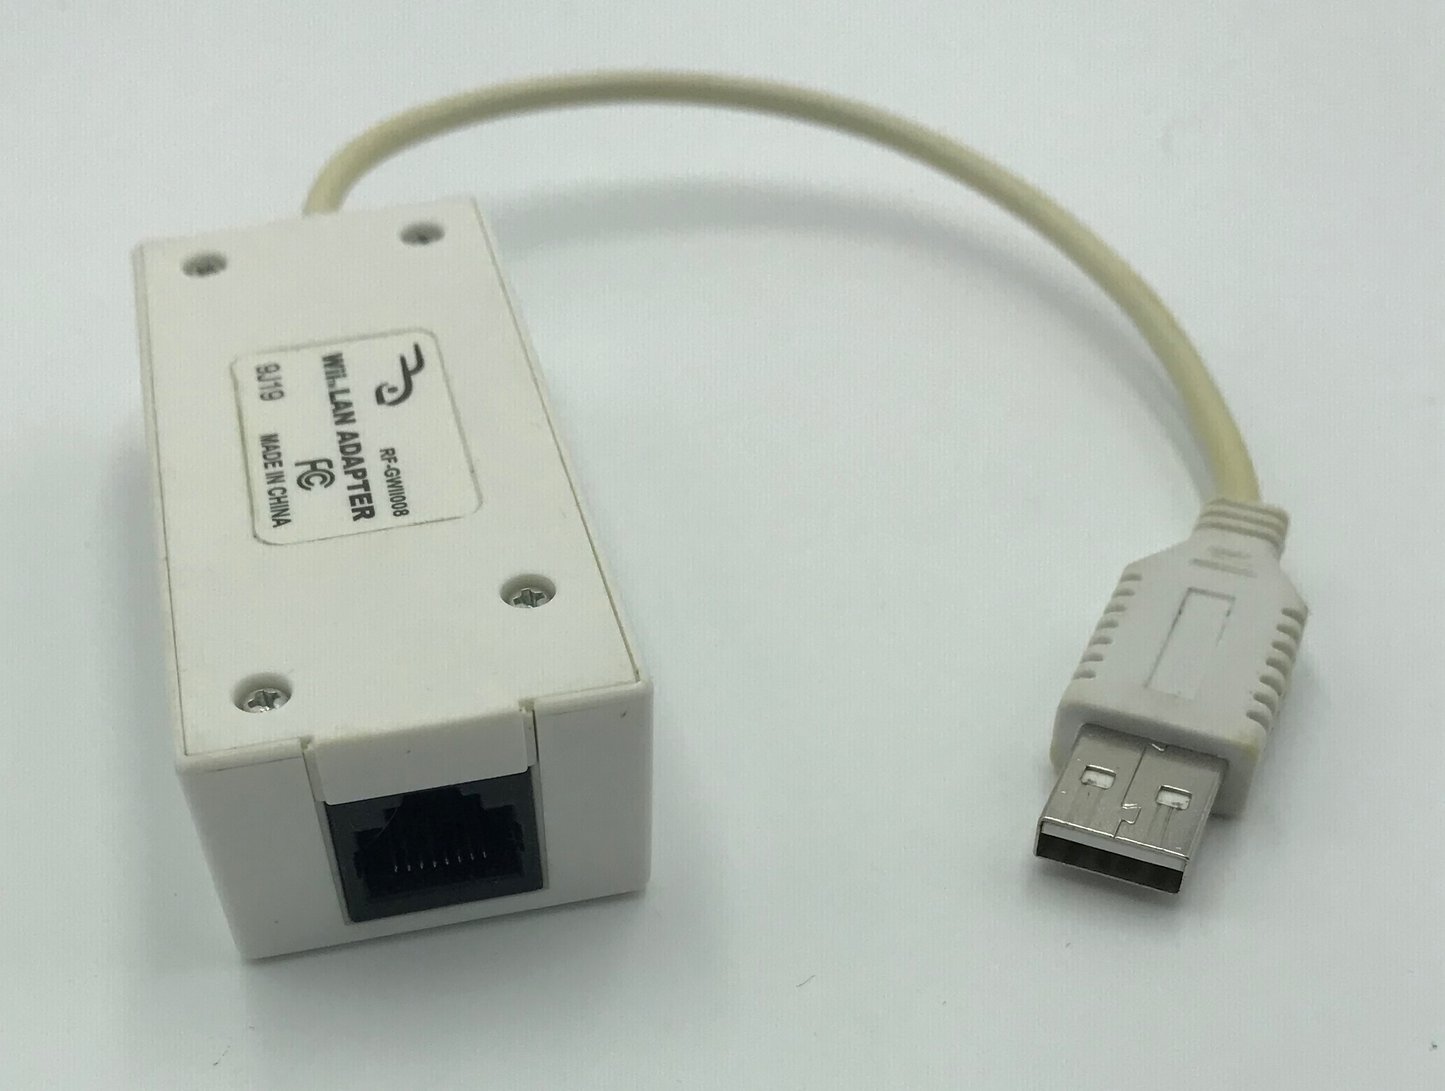 USB LAN Adapter Rockfish - Wii